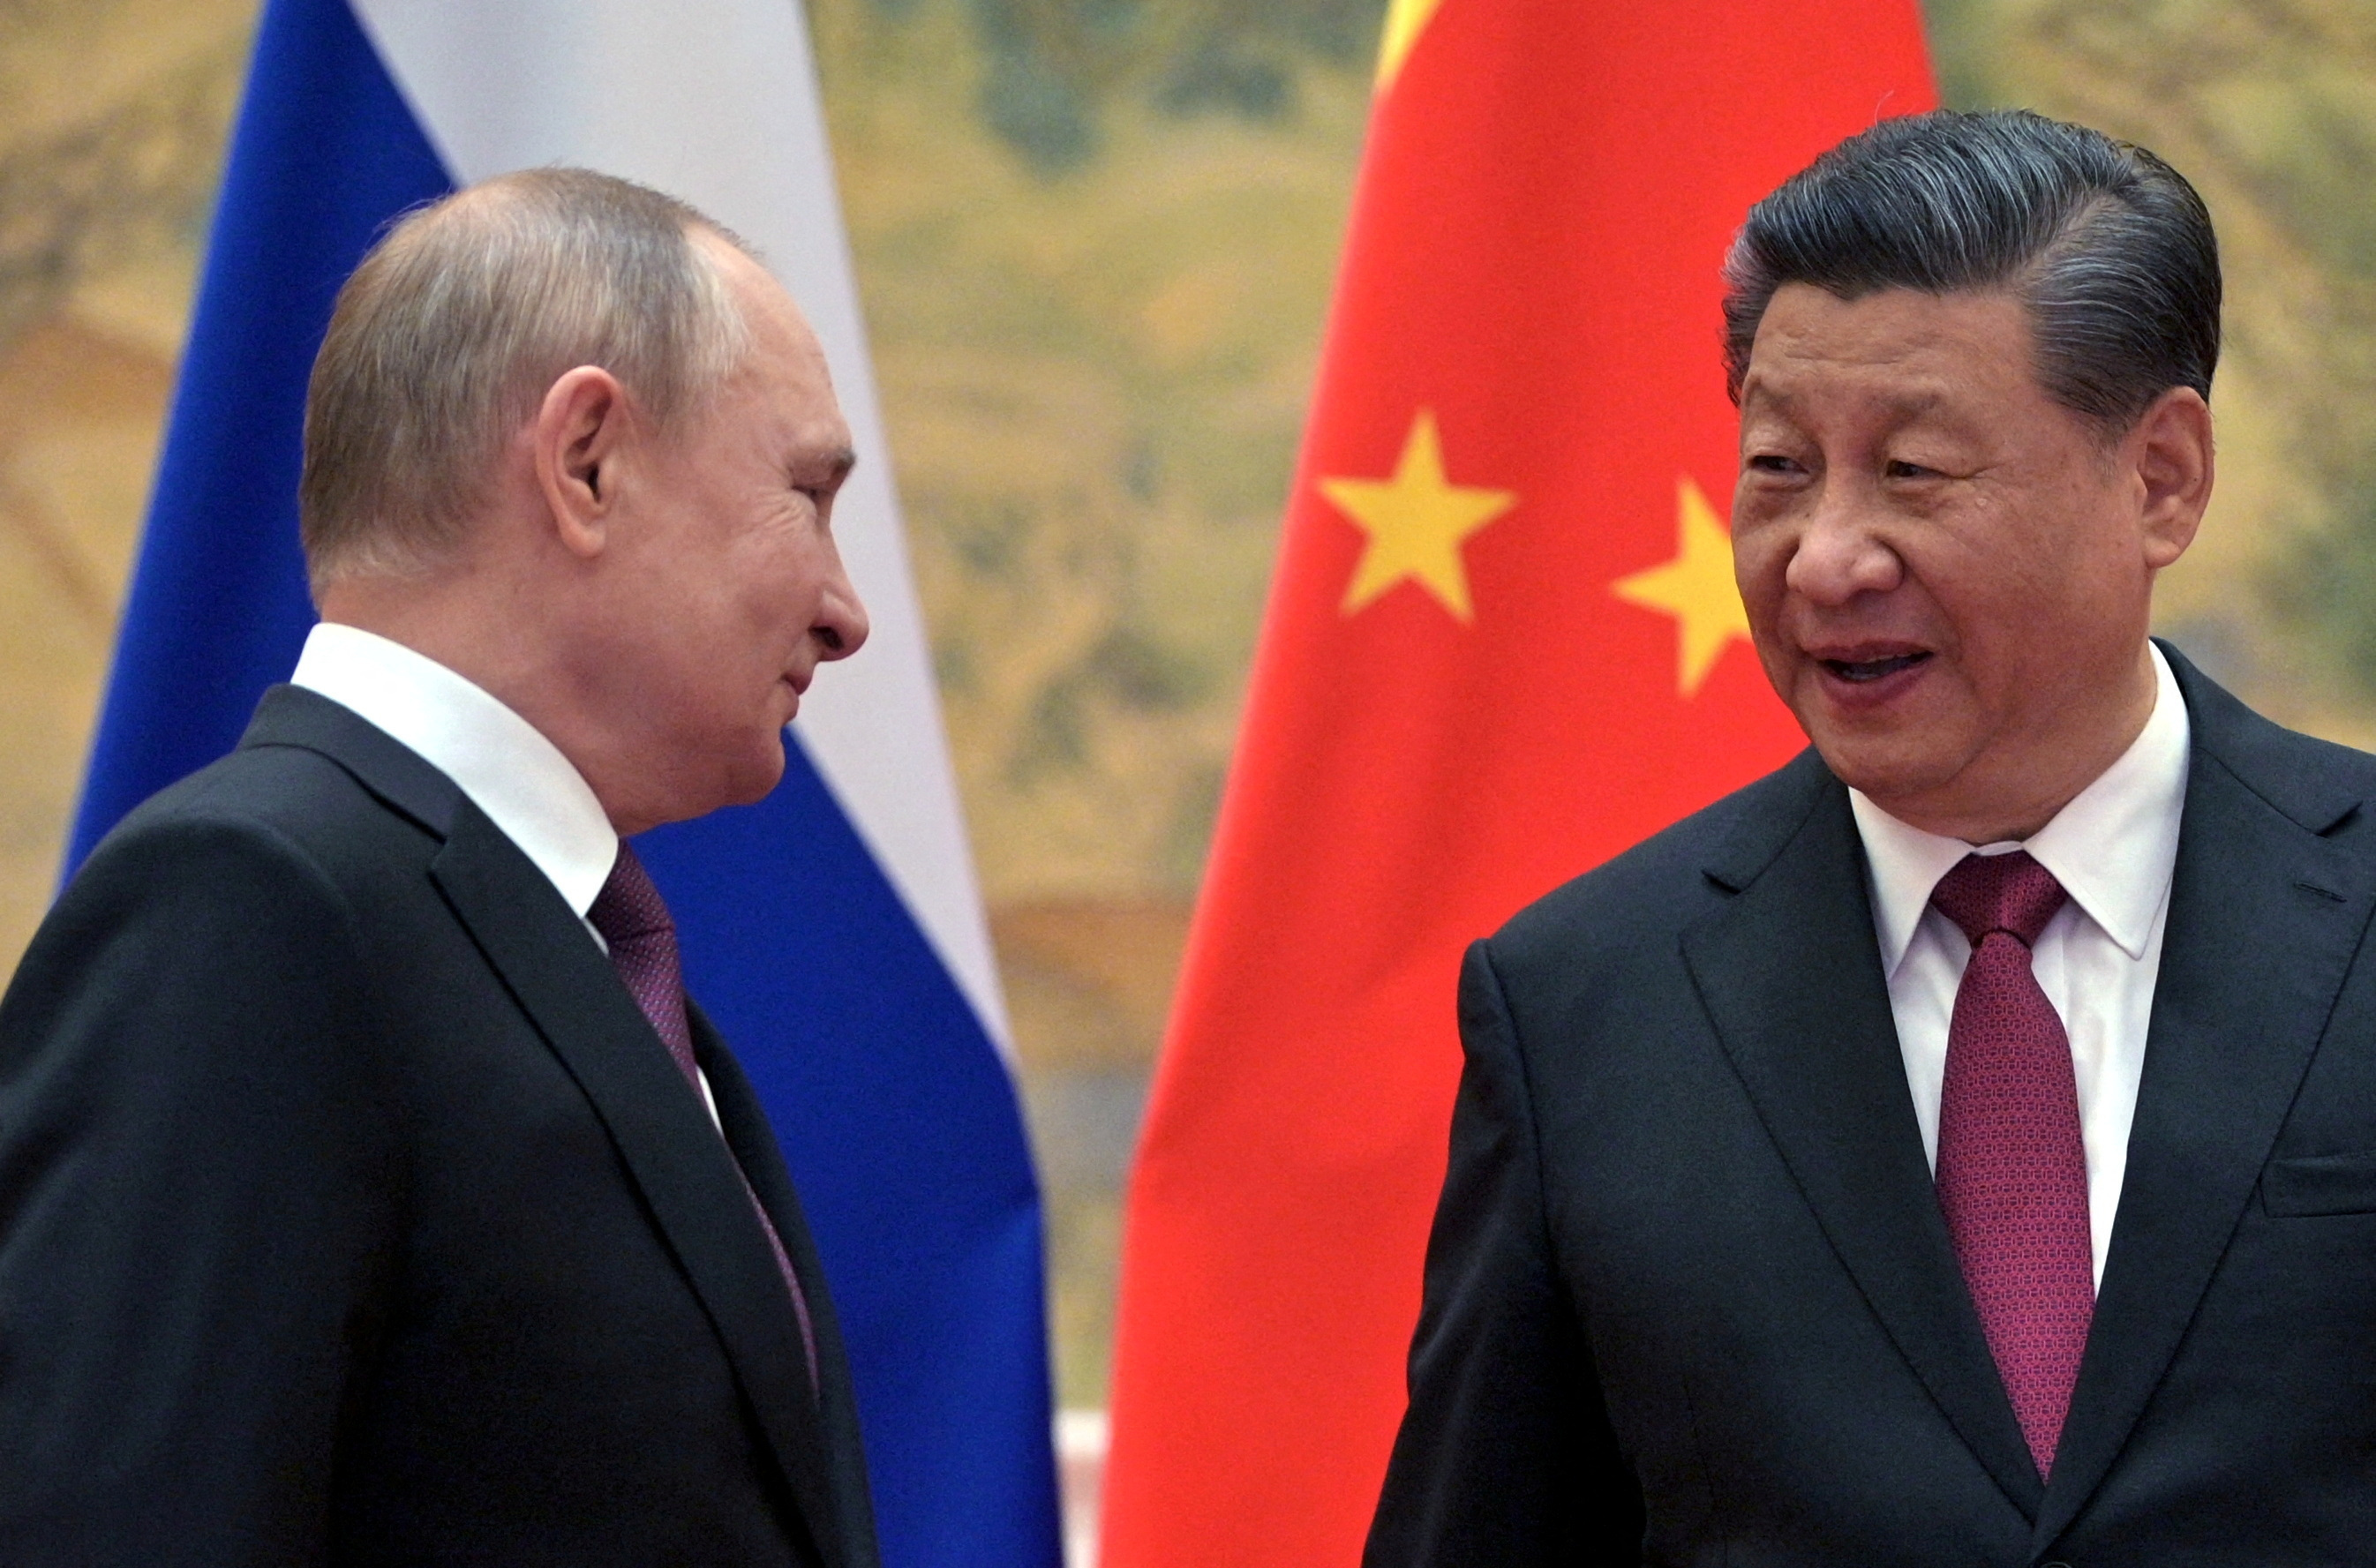 Russian President Putin met with Chinese President Xi in Beijing